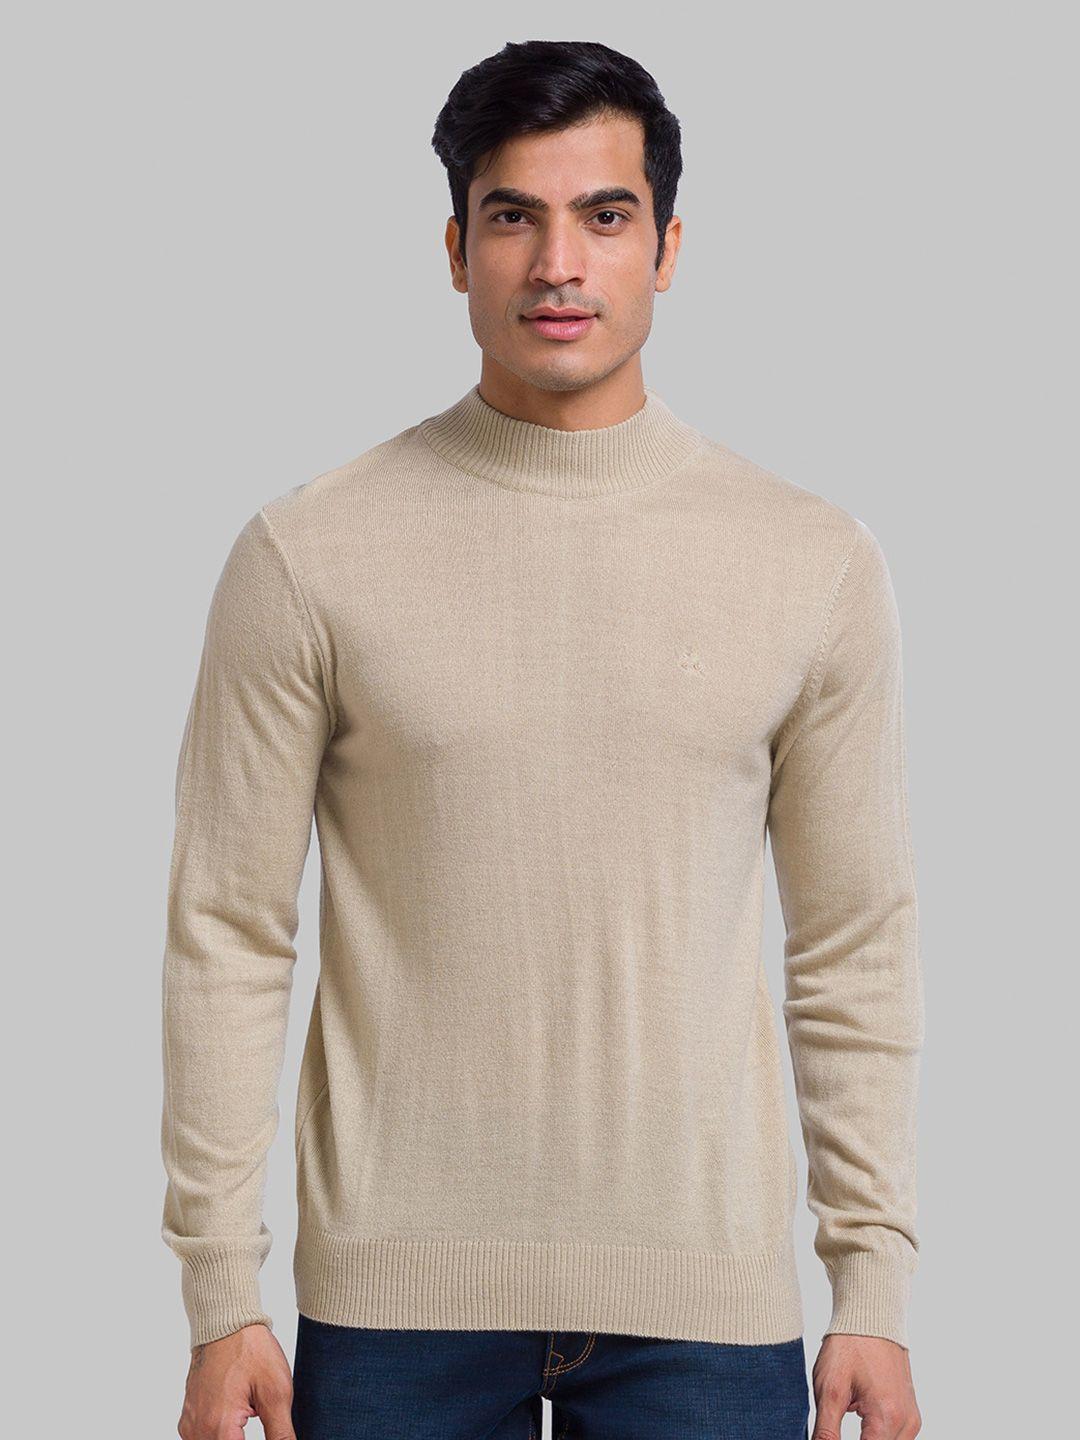 parx-men-turtle-neck-pullover-acrylic-sweater